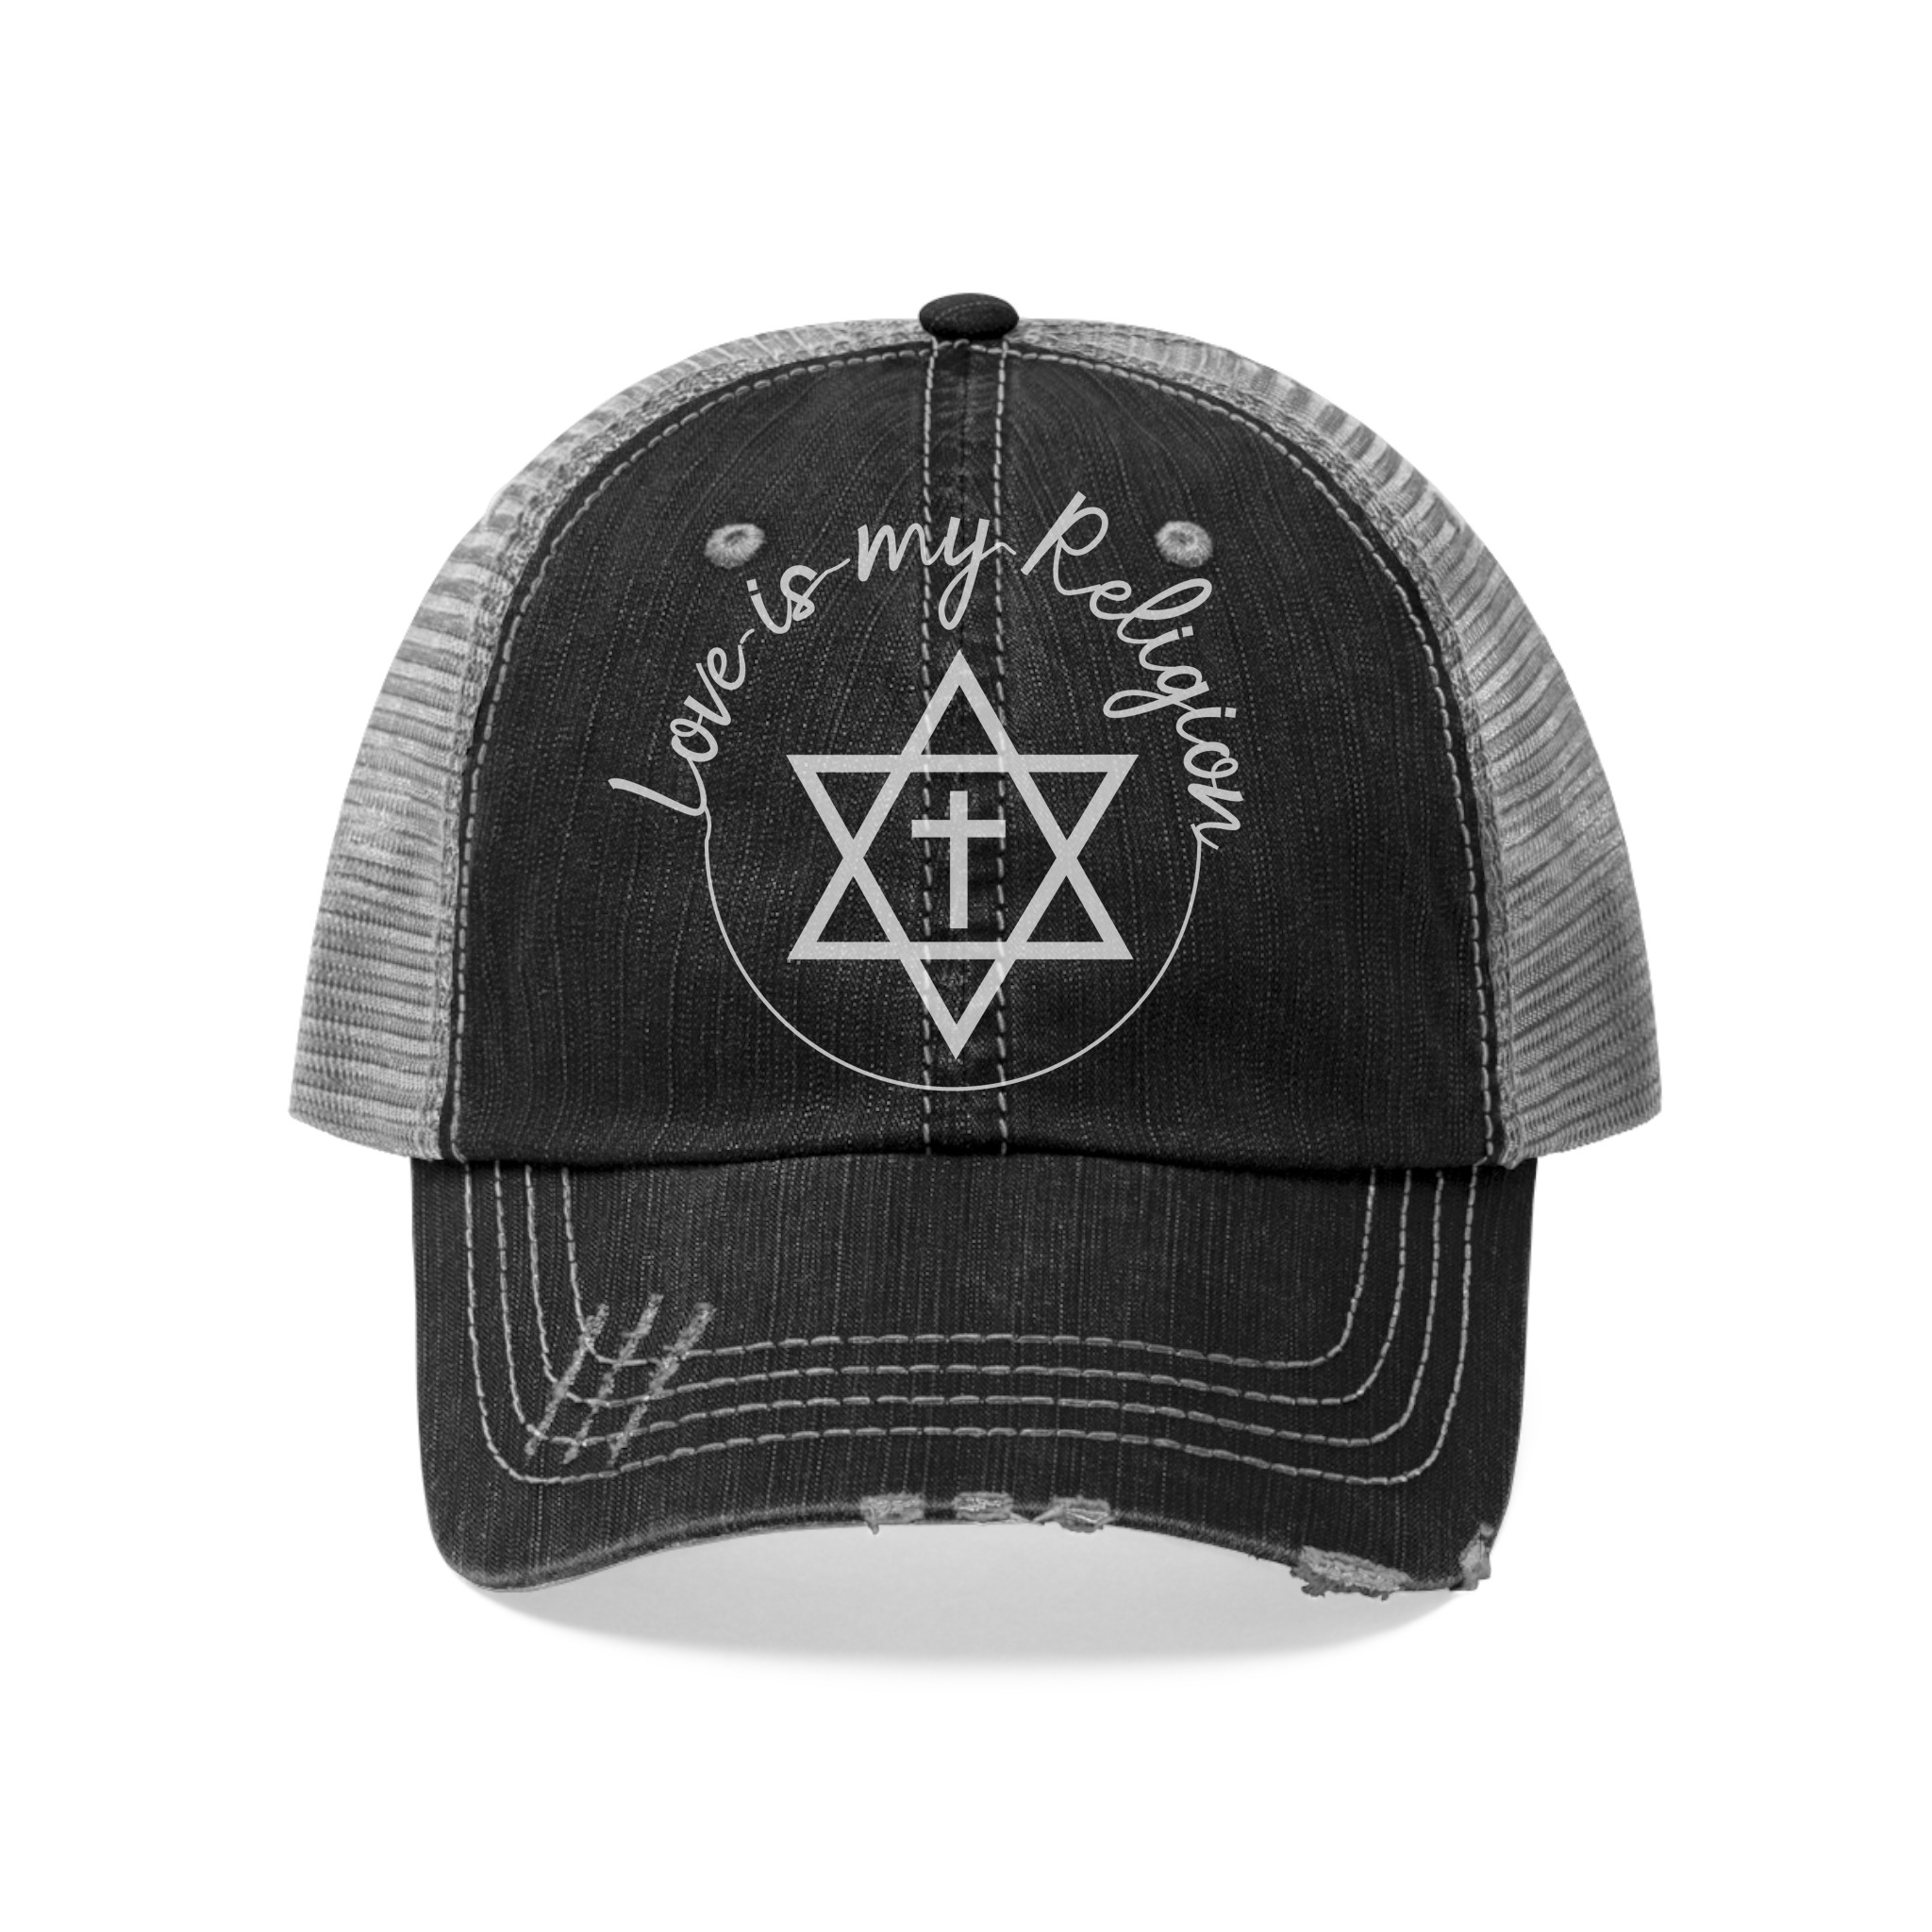 The David Trucker Hat